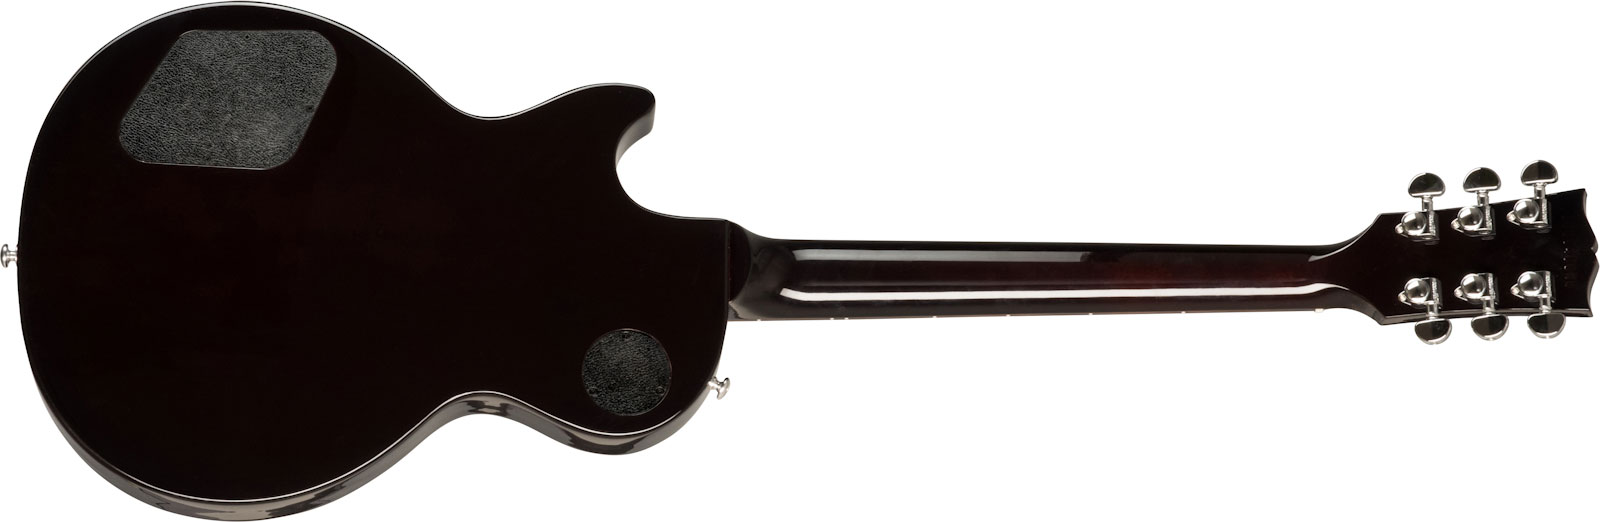 Gibson Les Paul Studio Modern 2h Ht Rw - Smokehouse Burst - Single-Cut-E-Gitarre - Variation 1